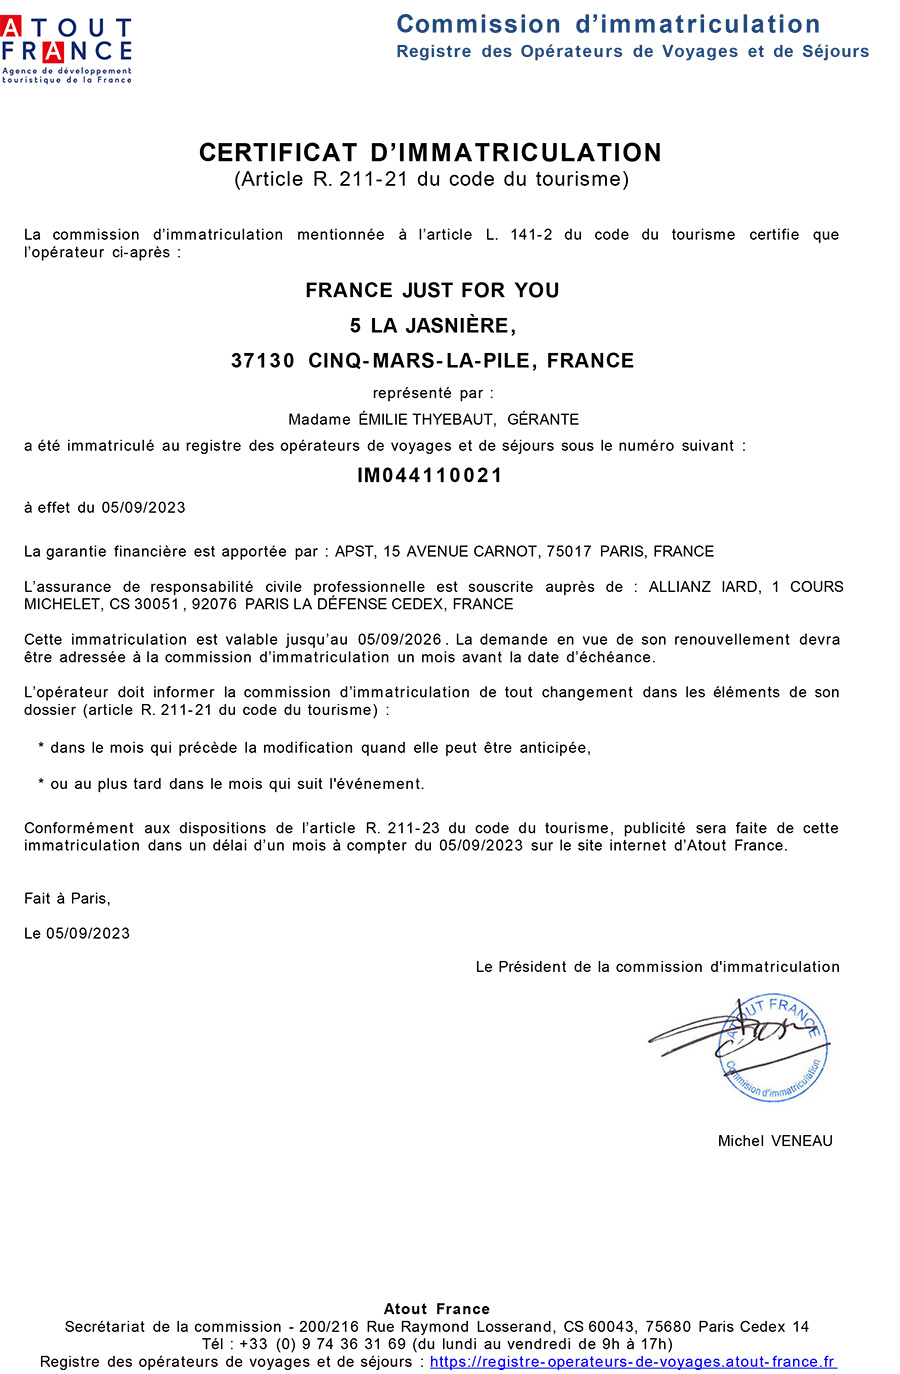 Atout France Certificate